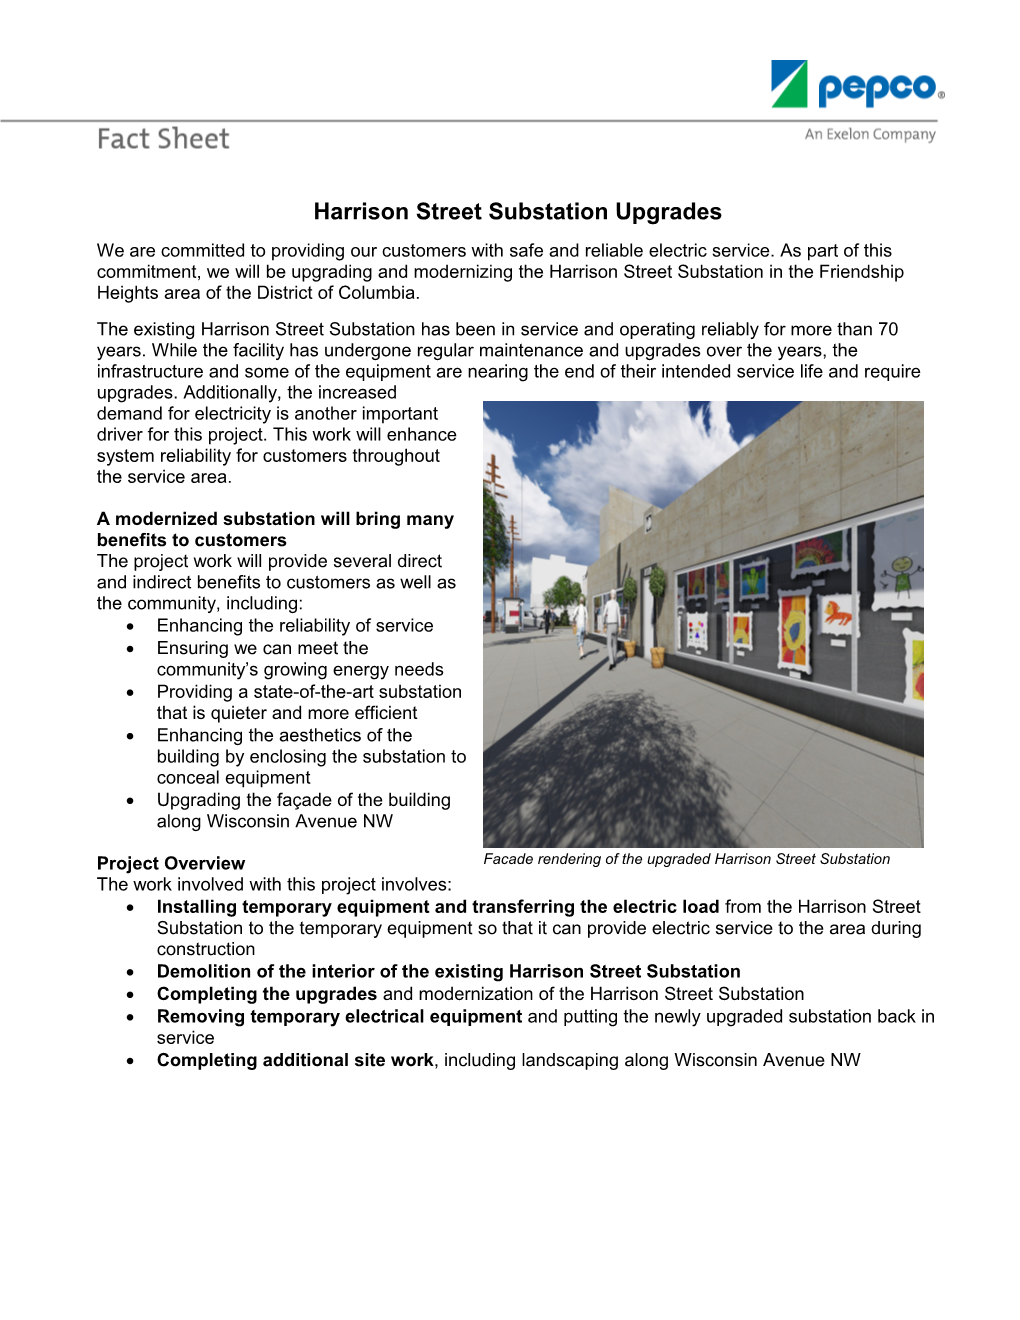 Harrison Street Substation Upgrades